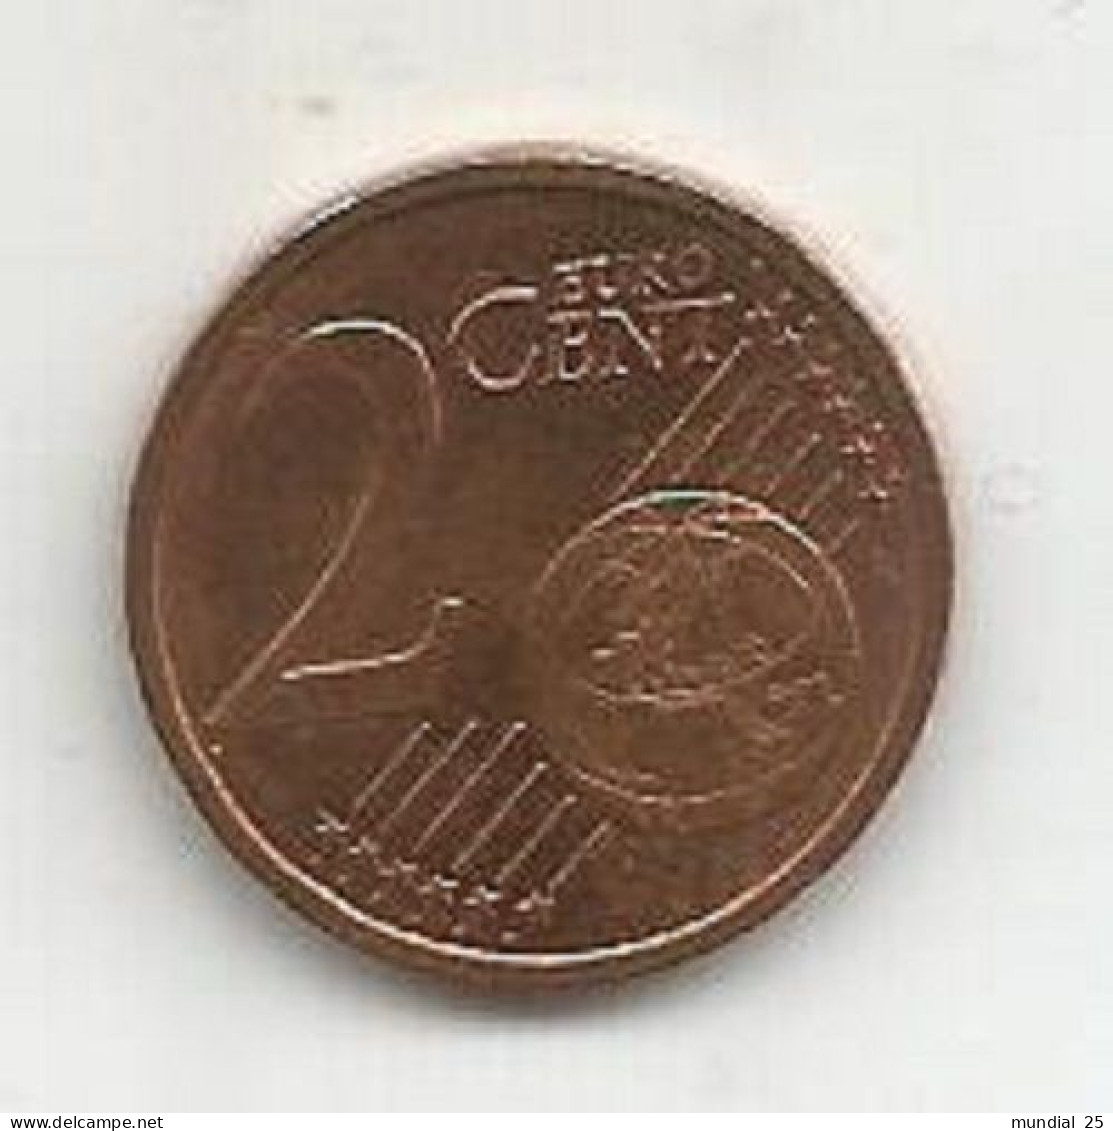 IRELAND 2 EURO CENT 2007 - Ireland